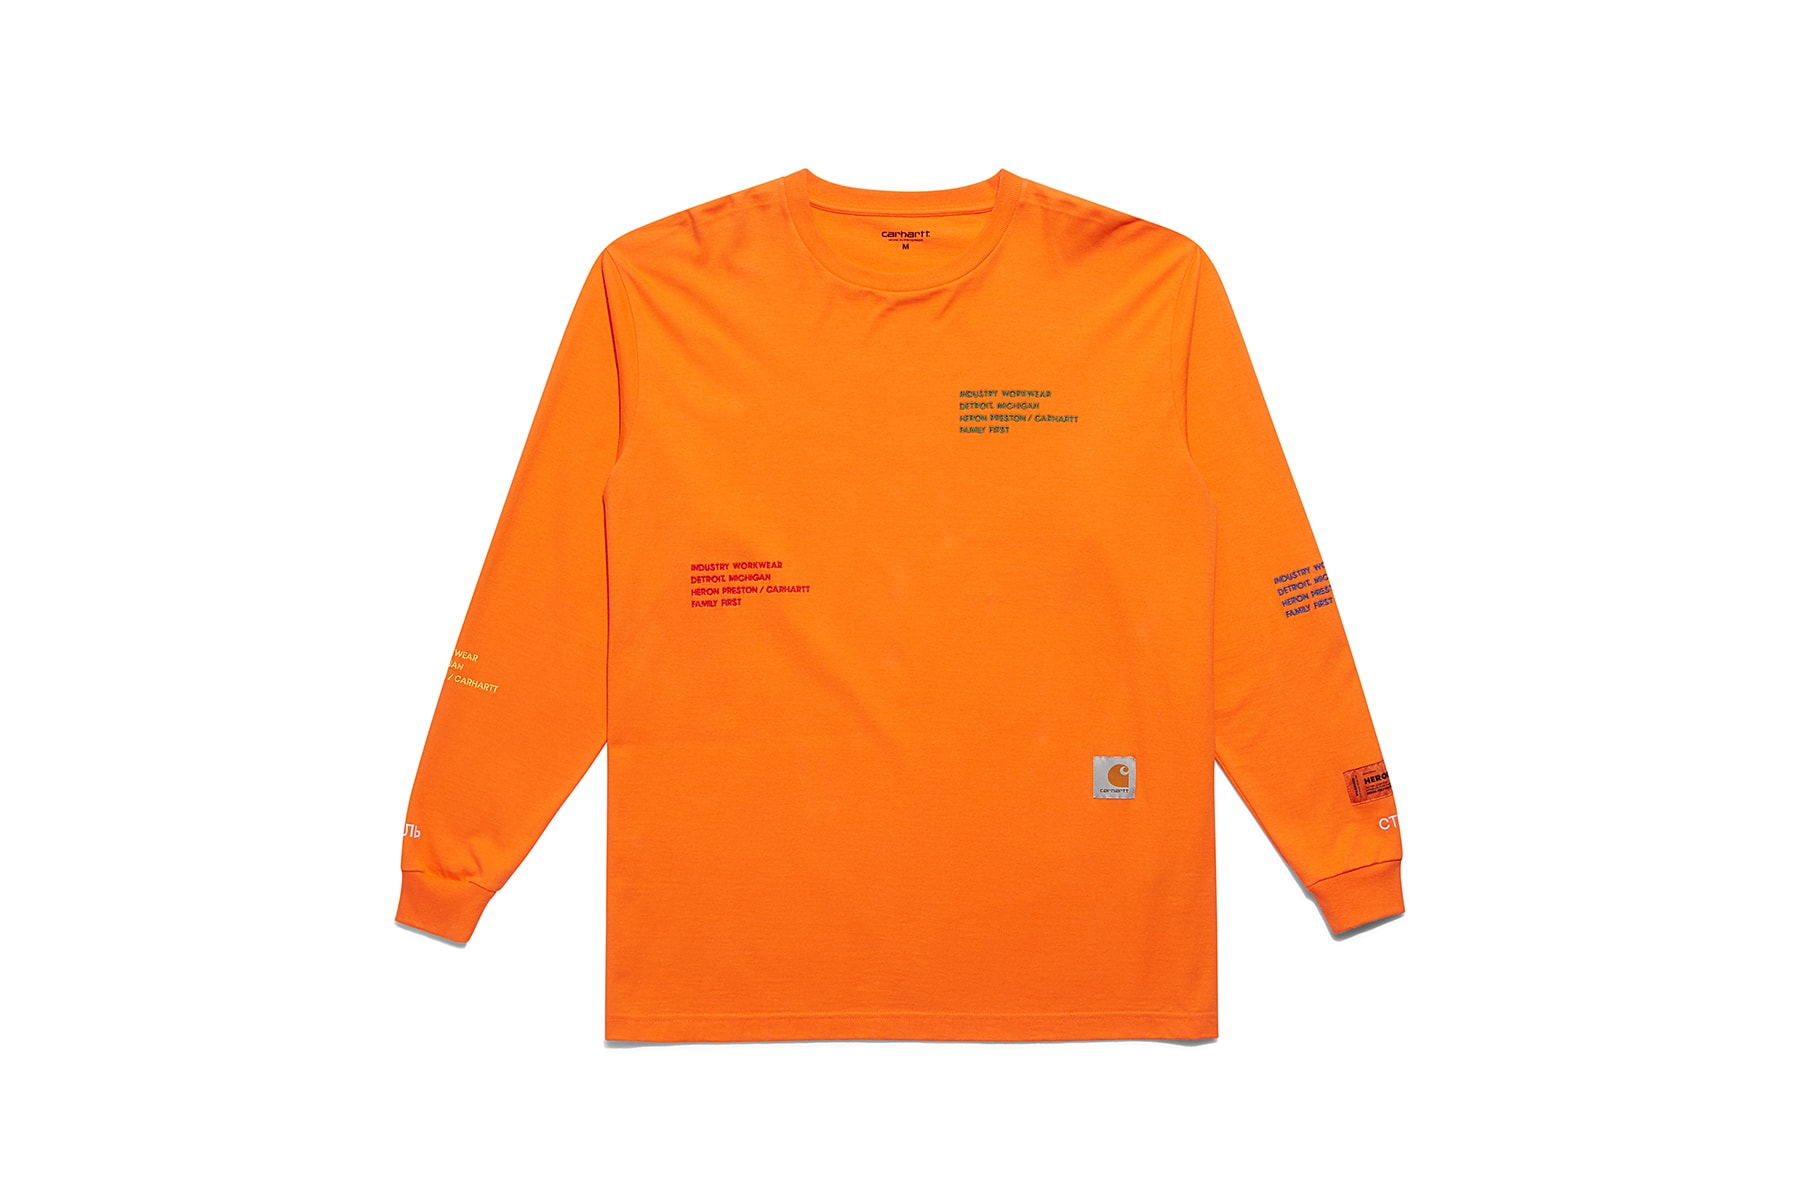 heron preston public figure fall winter 2018 collaboration carhartt wip orange sweater logo